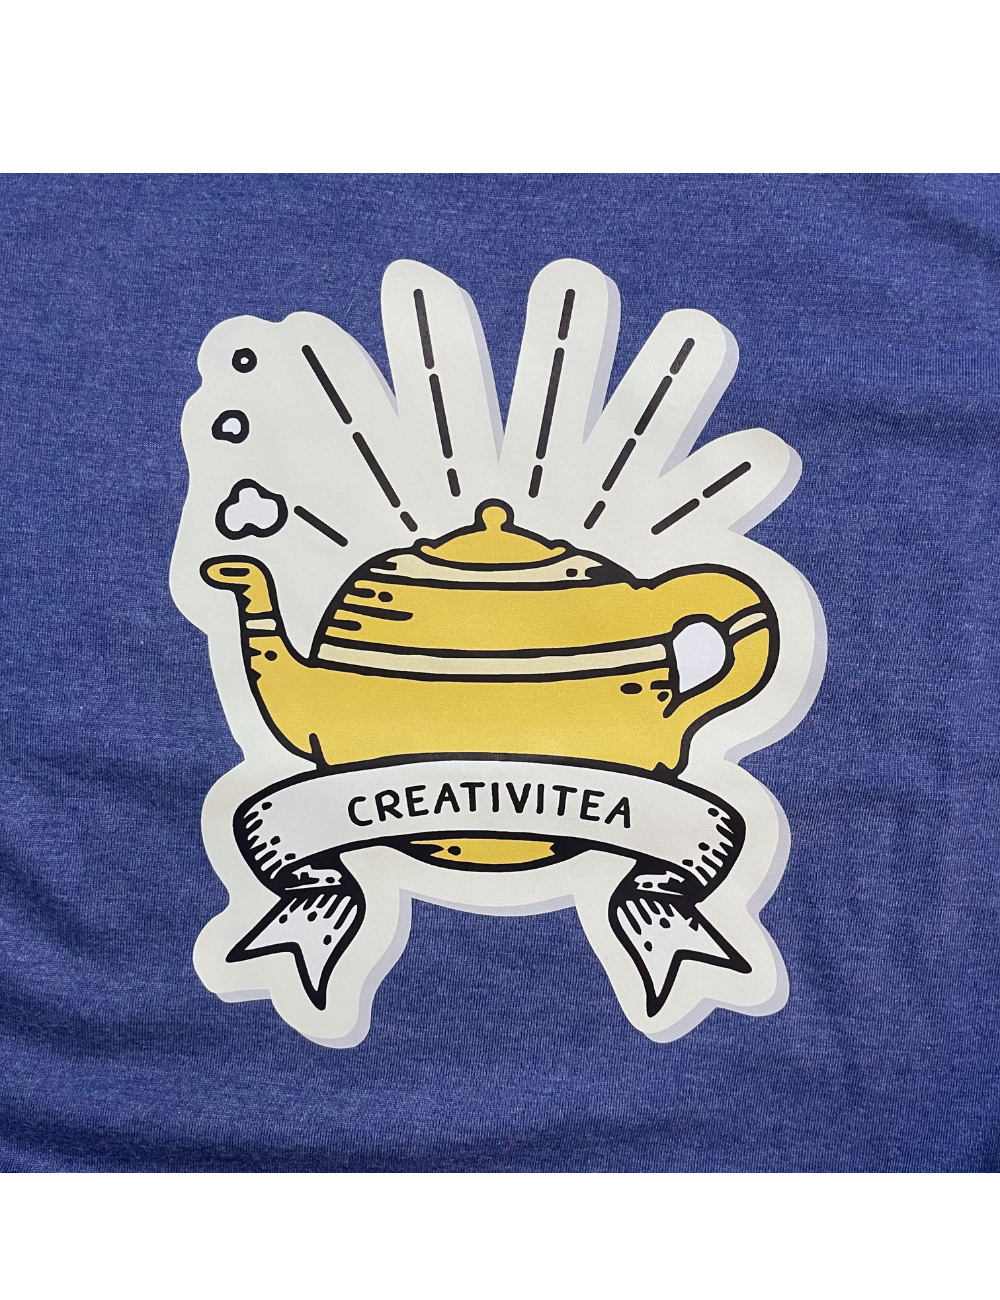 Creativitea - Indigo - Regular Fit 100% Cotton T-Shirt